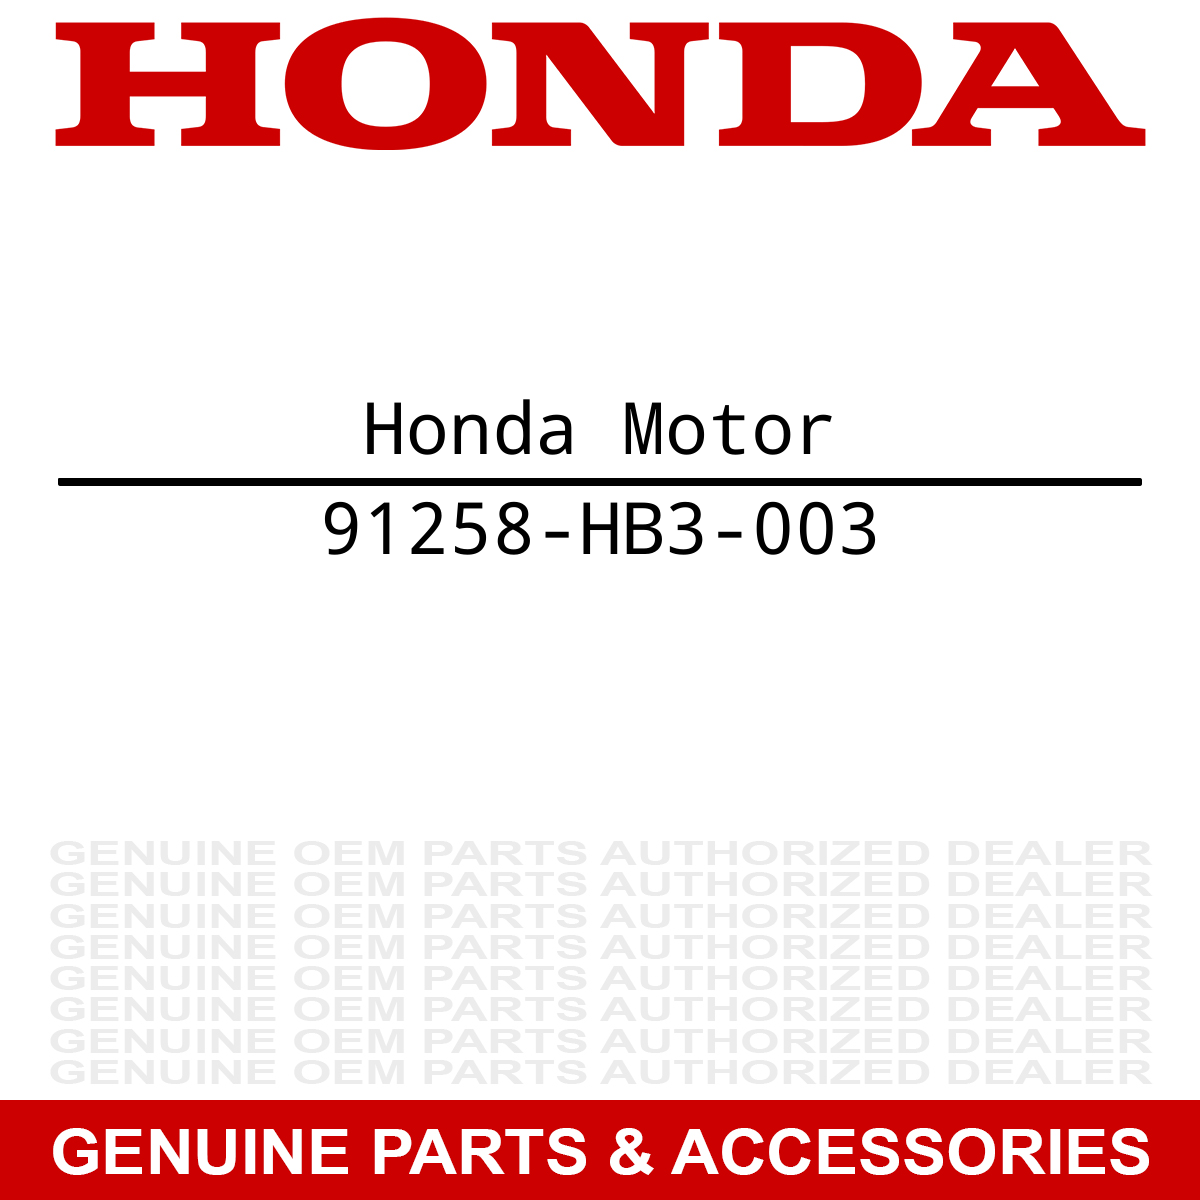 Honda 91258-HB3-003 Dust Seal SH150i Reflex Rancher PCX125 200 250 300 350 400